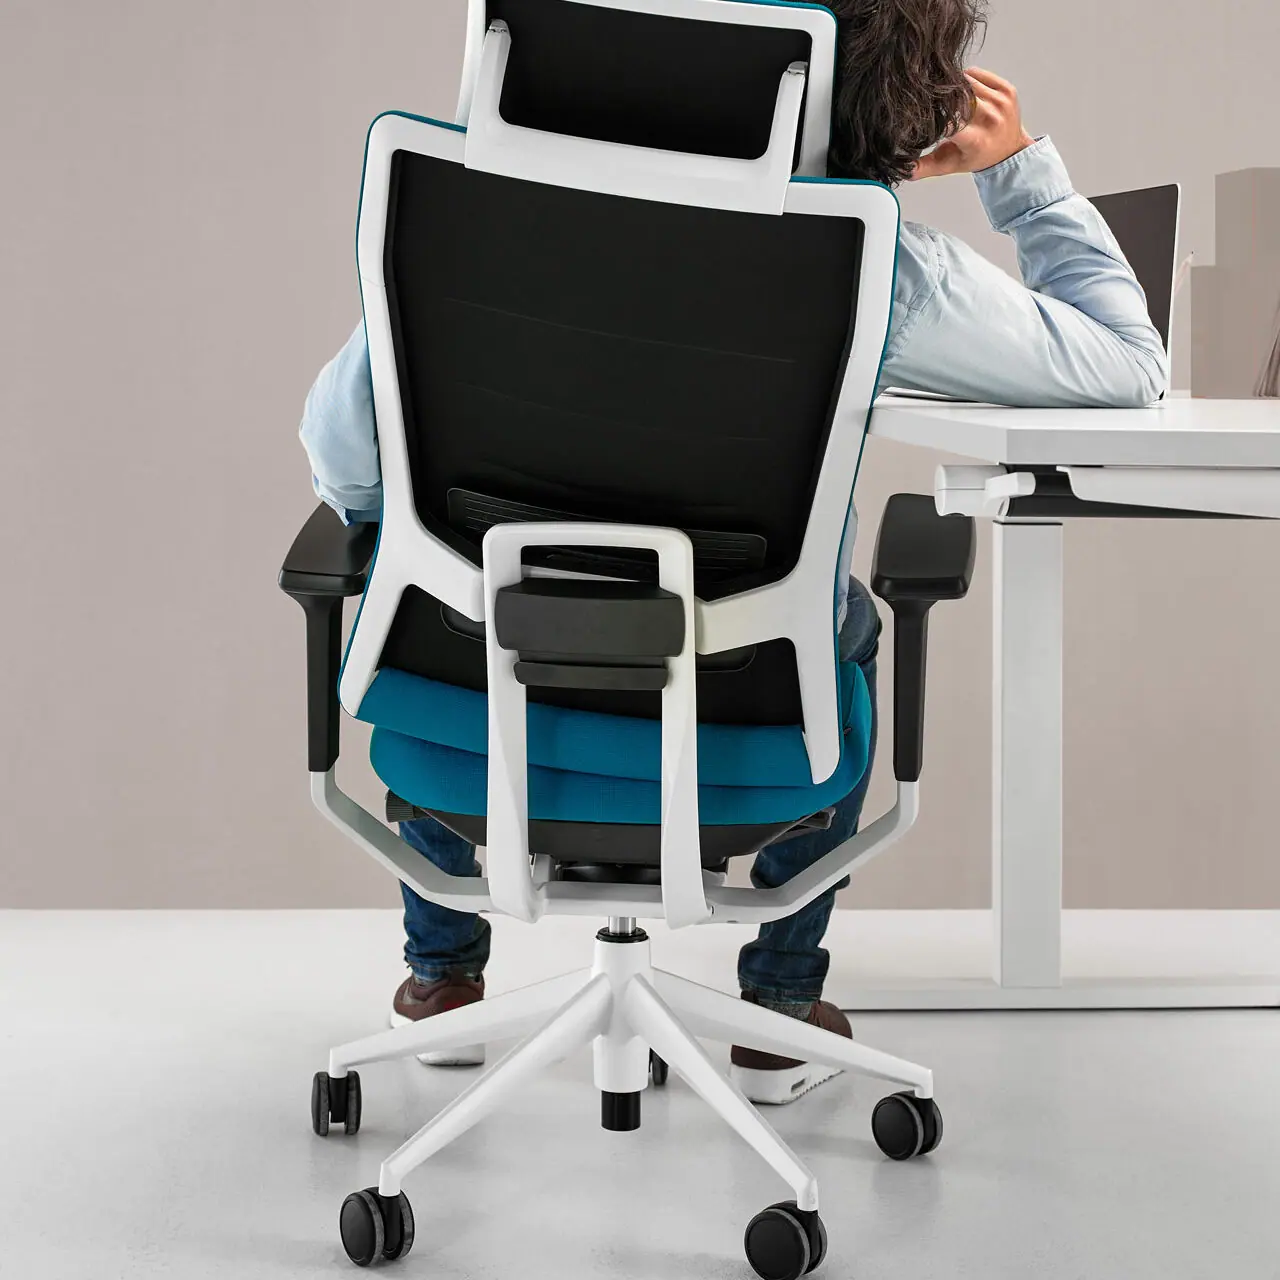 actiu-tnk-flex-office-chair-7-aspect-ratio-100-100-2